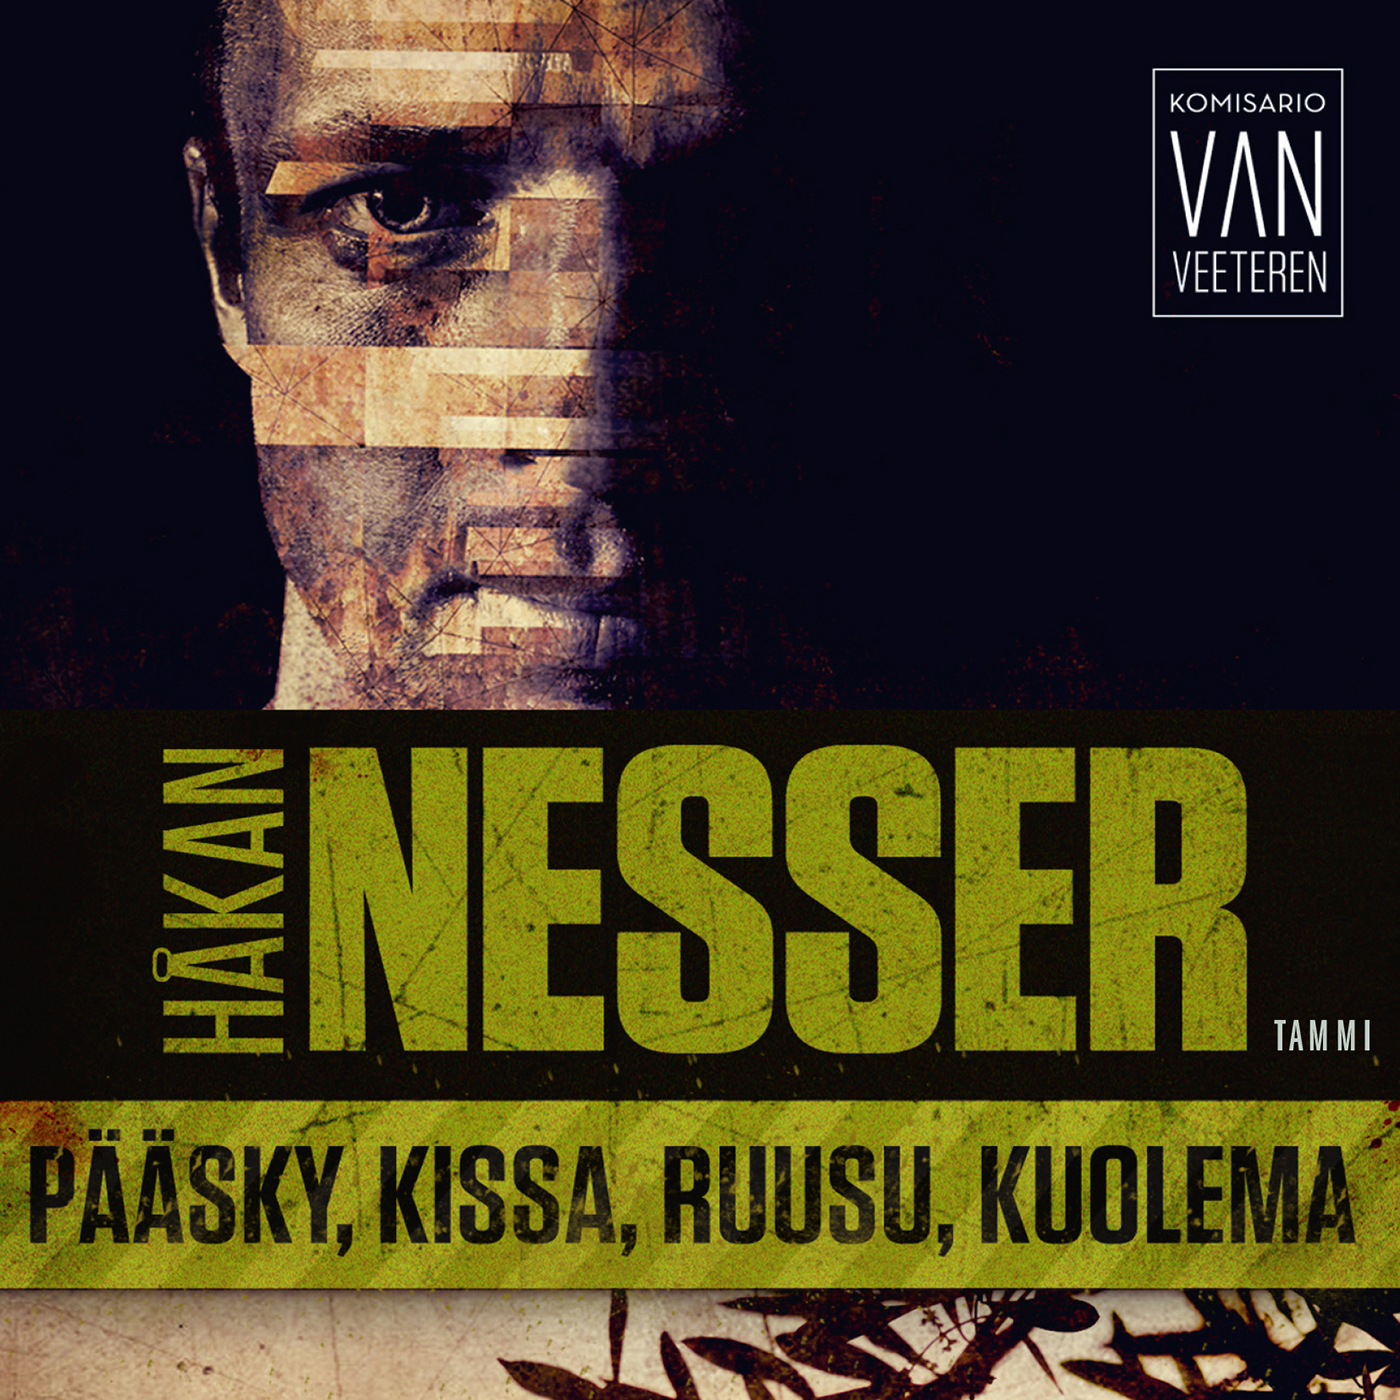 Nesser, Håkan - Pääsky, kissa, ruusu, kuolema: Van Veeteren 9, audiobook